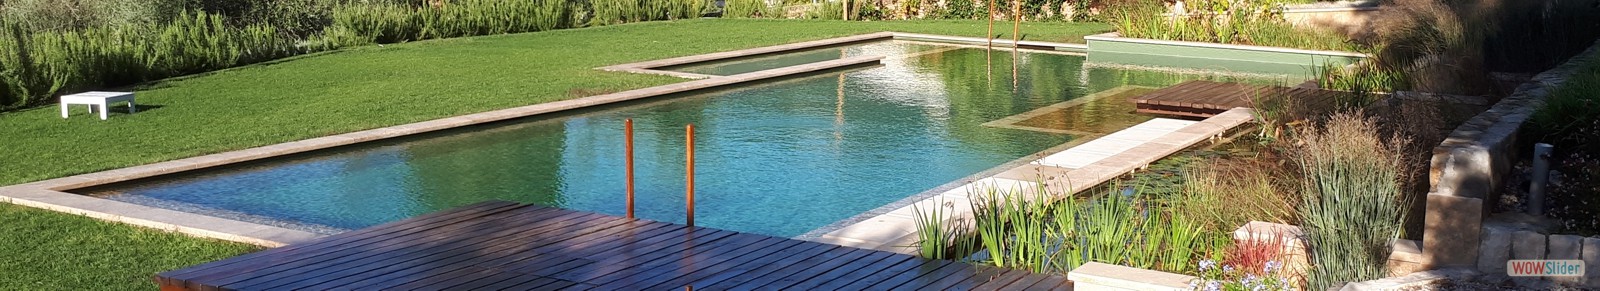 piscina_naturale